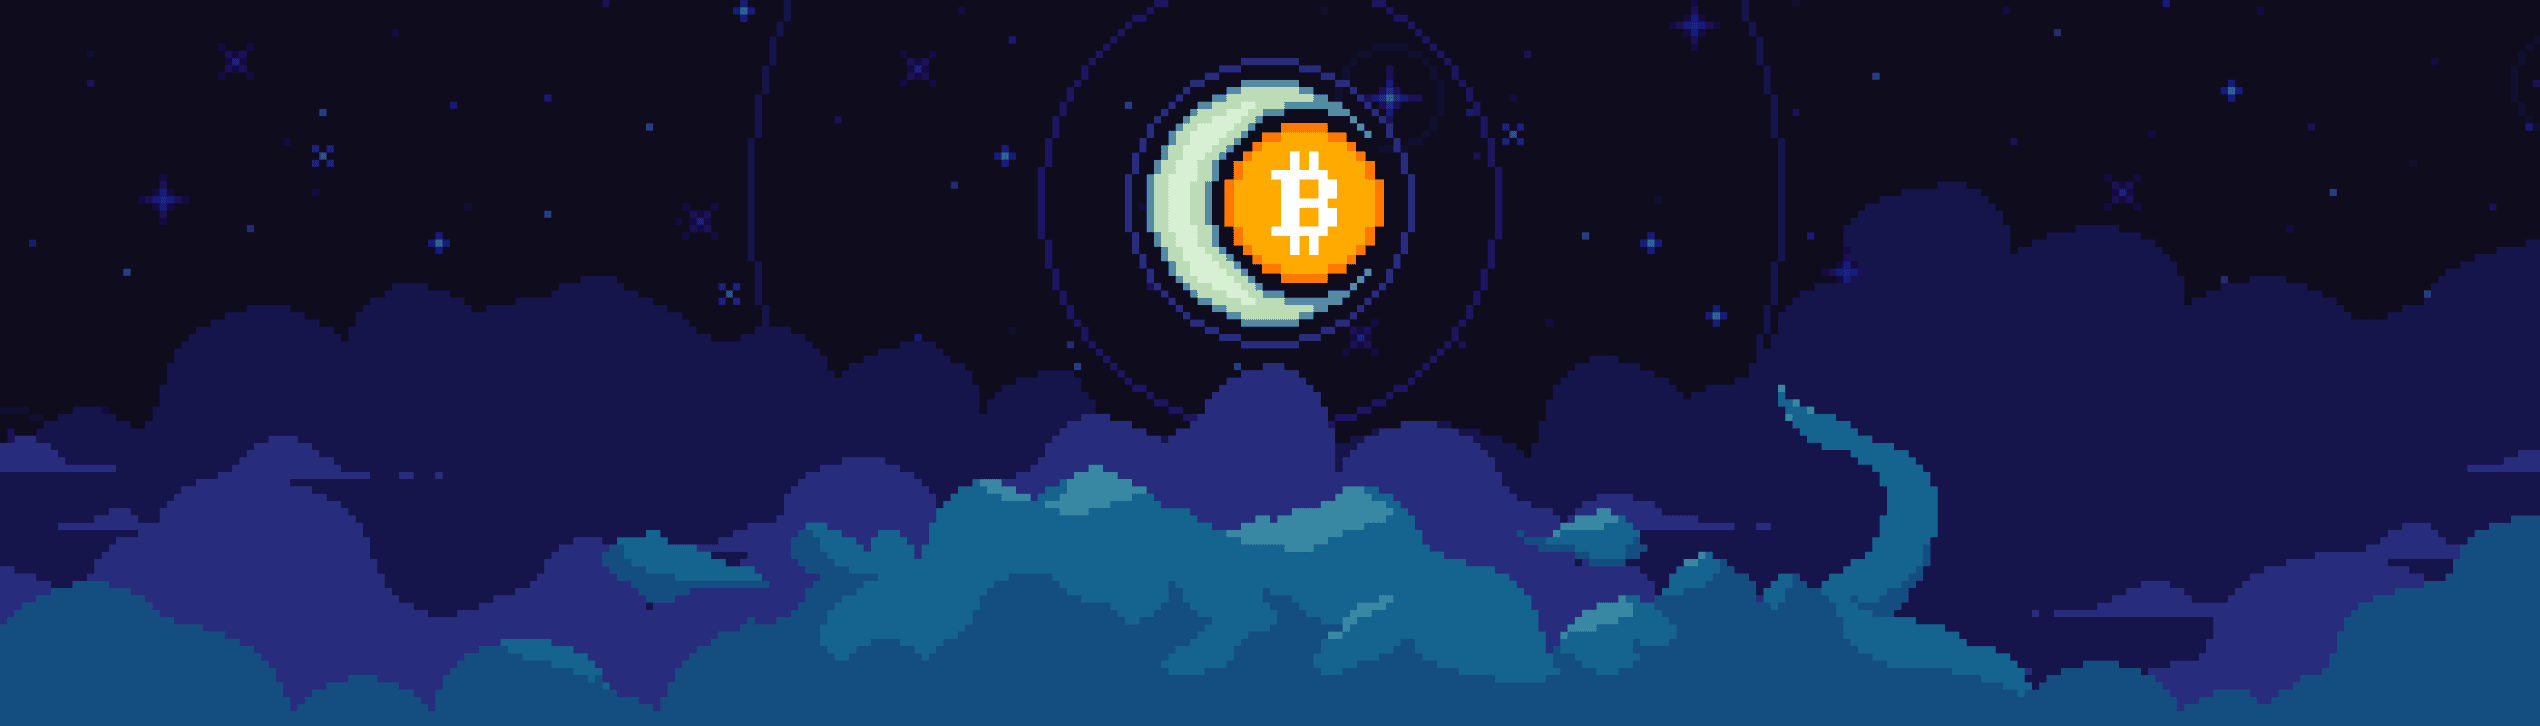 Bitcoinbirds_Deployer banner